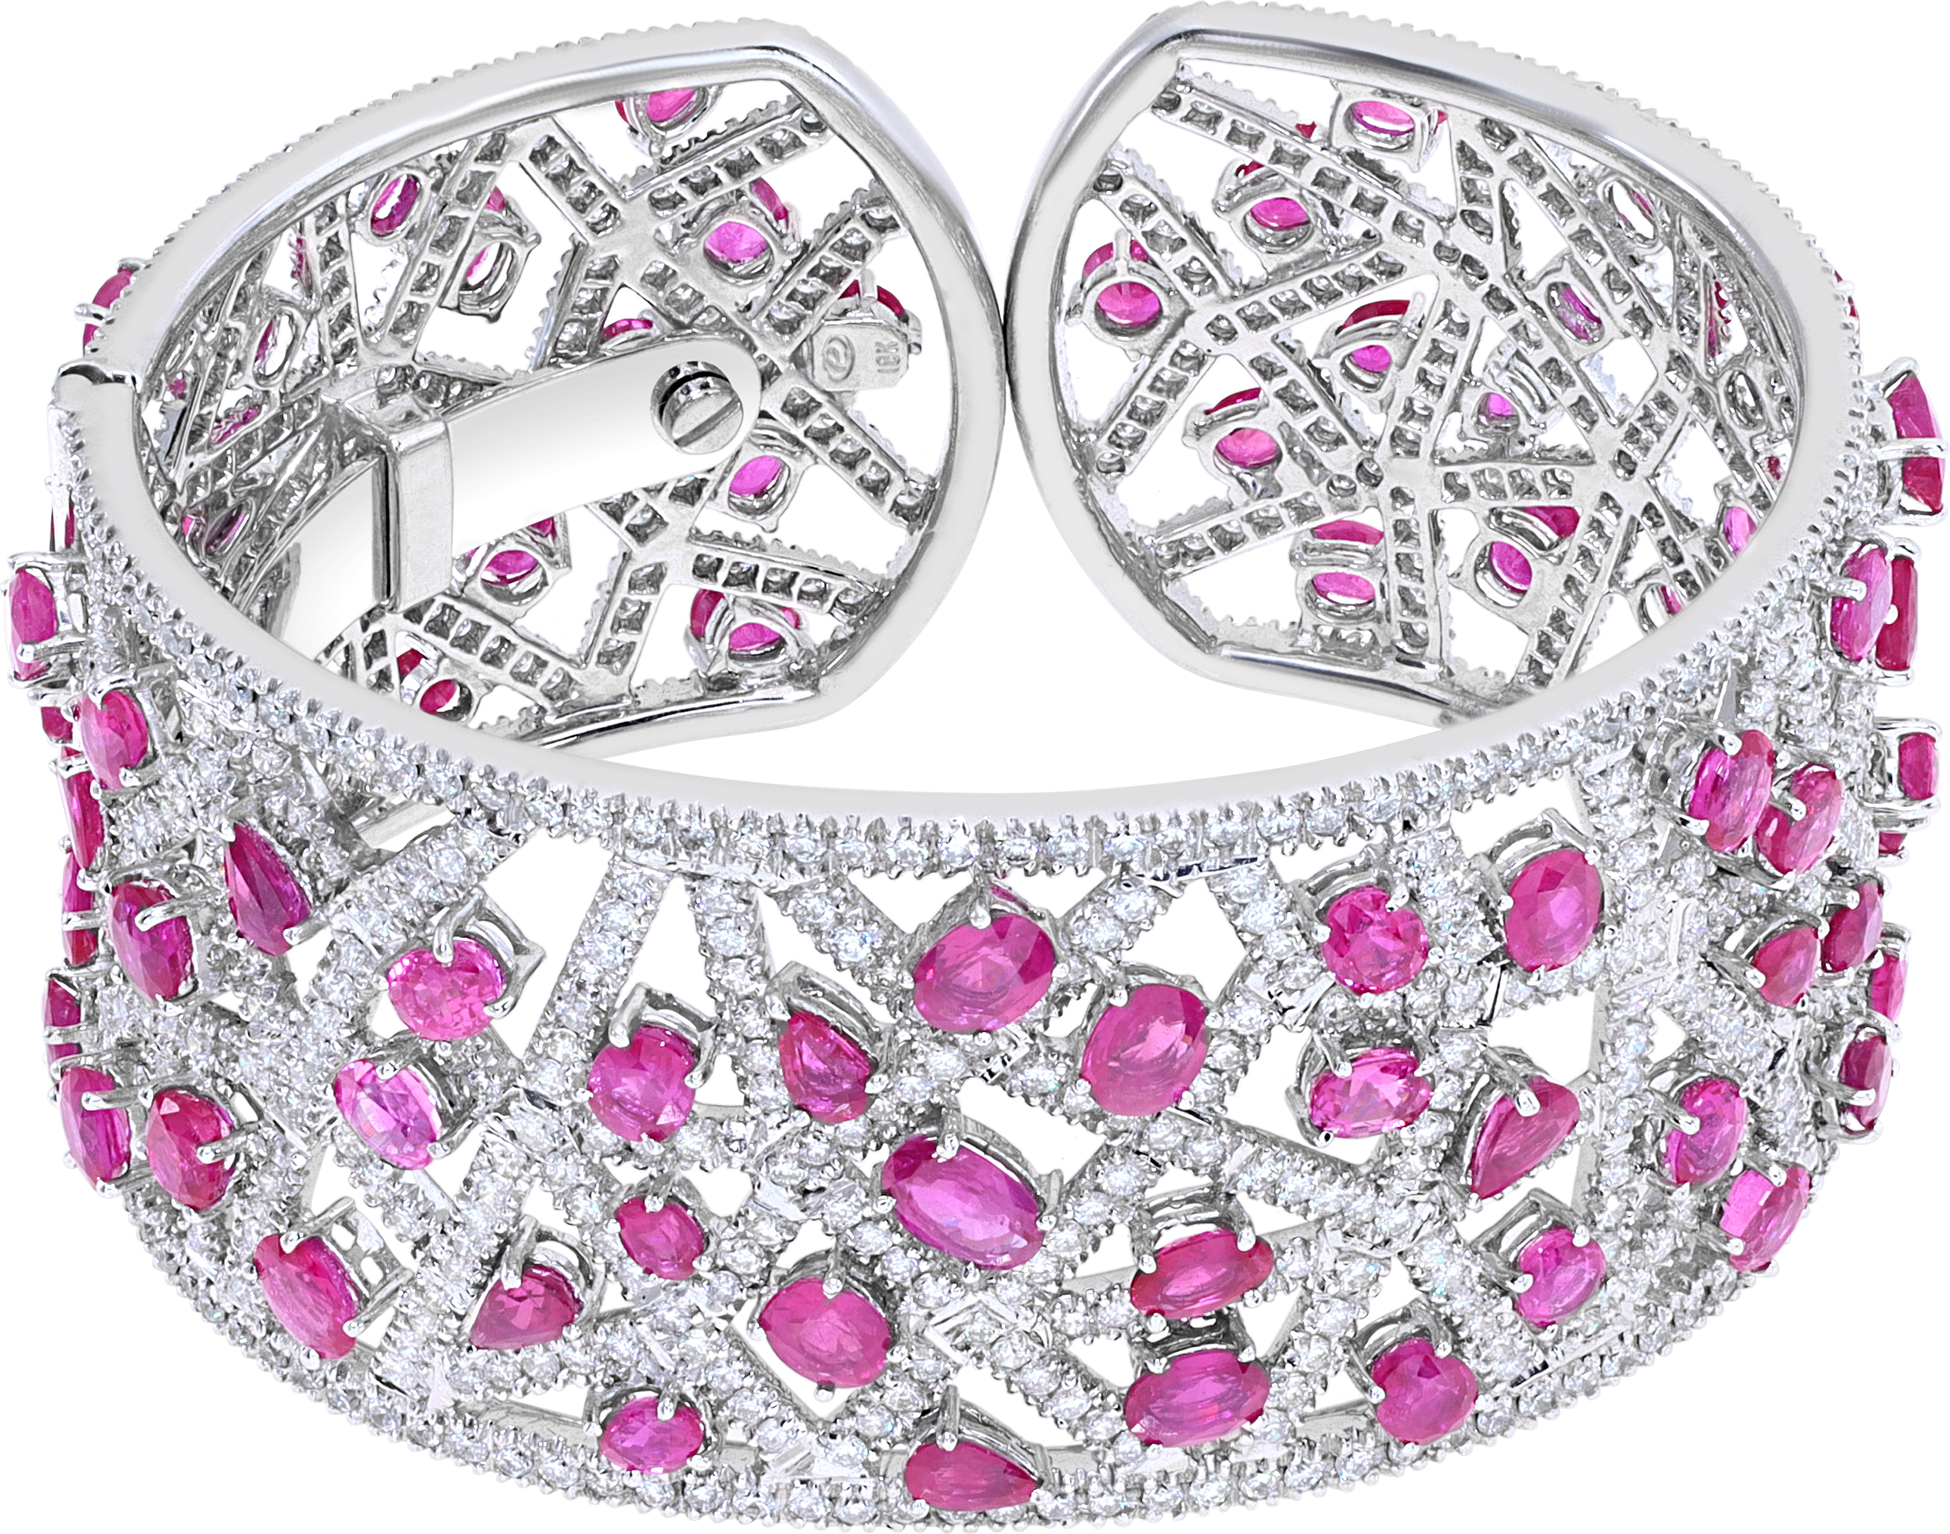 Rubies & diamonds cuff bangle in 18k white gold